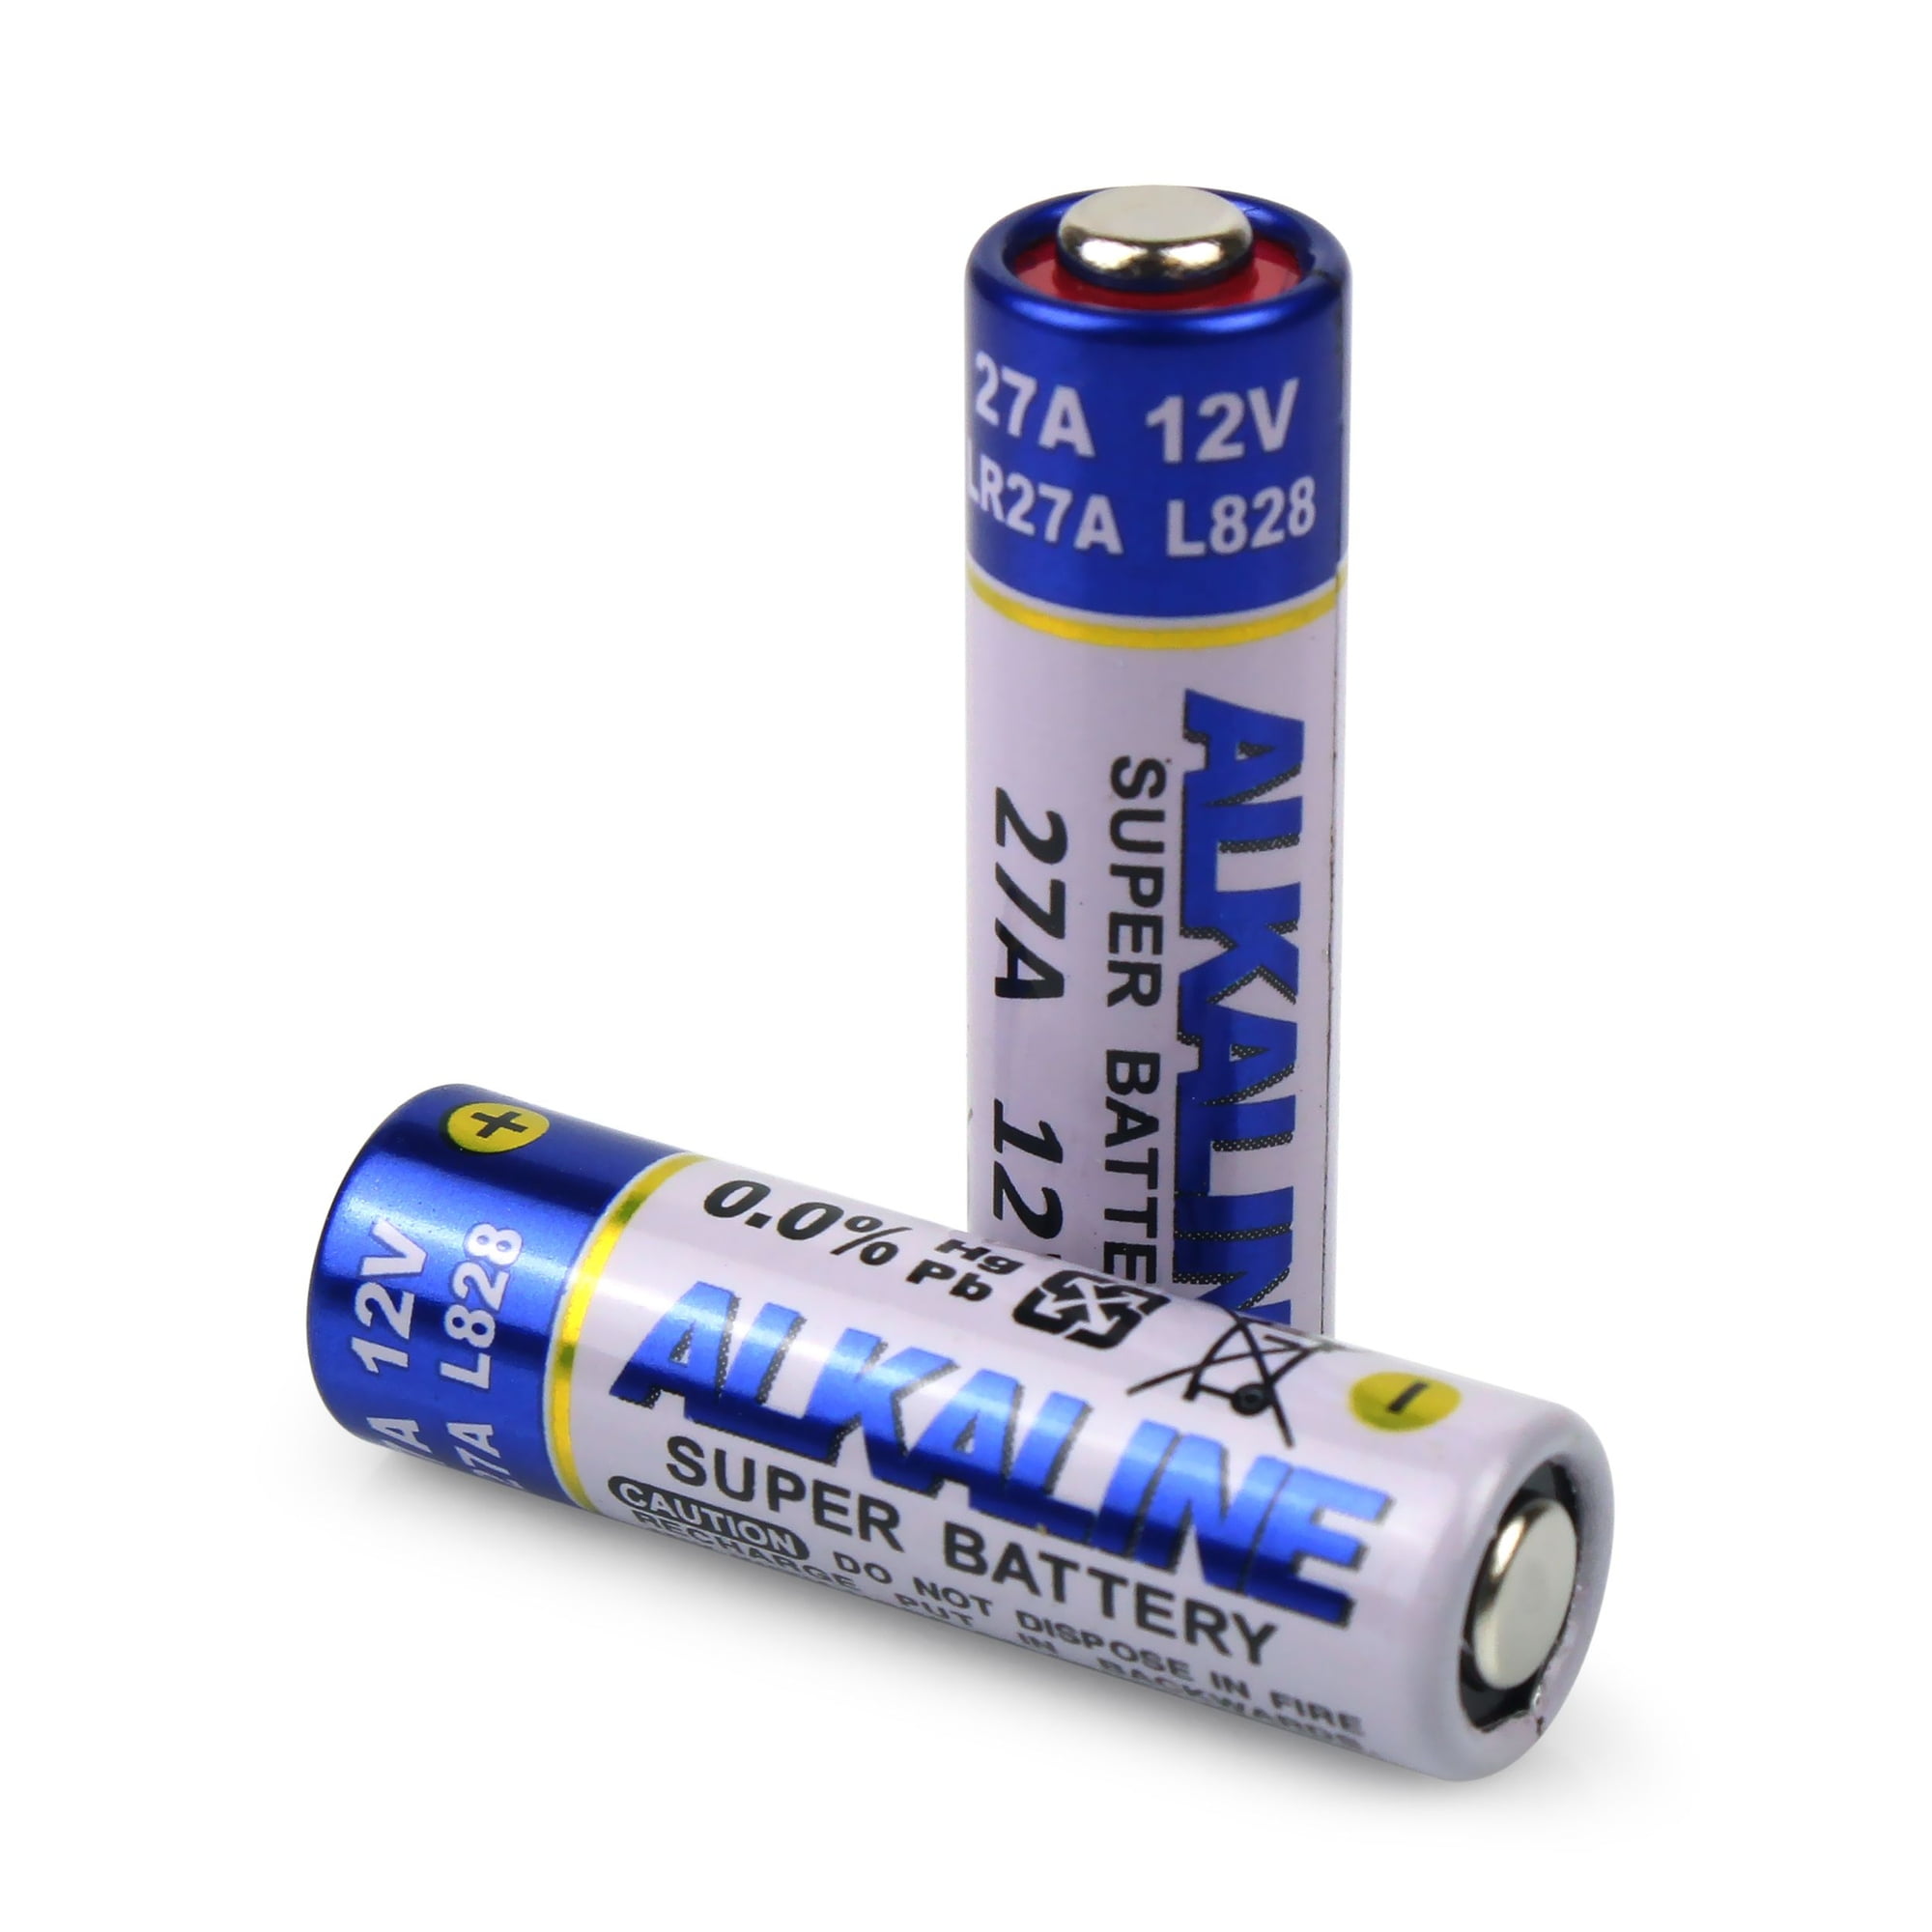 10pcs 12v 27a Trockene Alkaline-Batterie A27 G27a 27mn Ms27 Gp27a L828  V27ga Alk27a Kompatible Türklingel, Walkman, Autoalarm, Fernbedienung